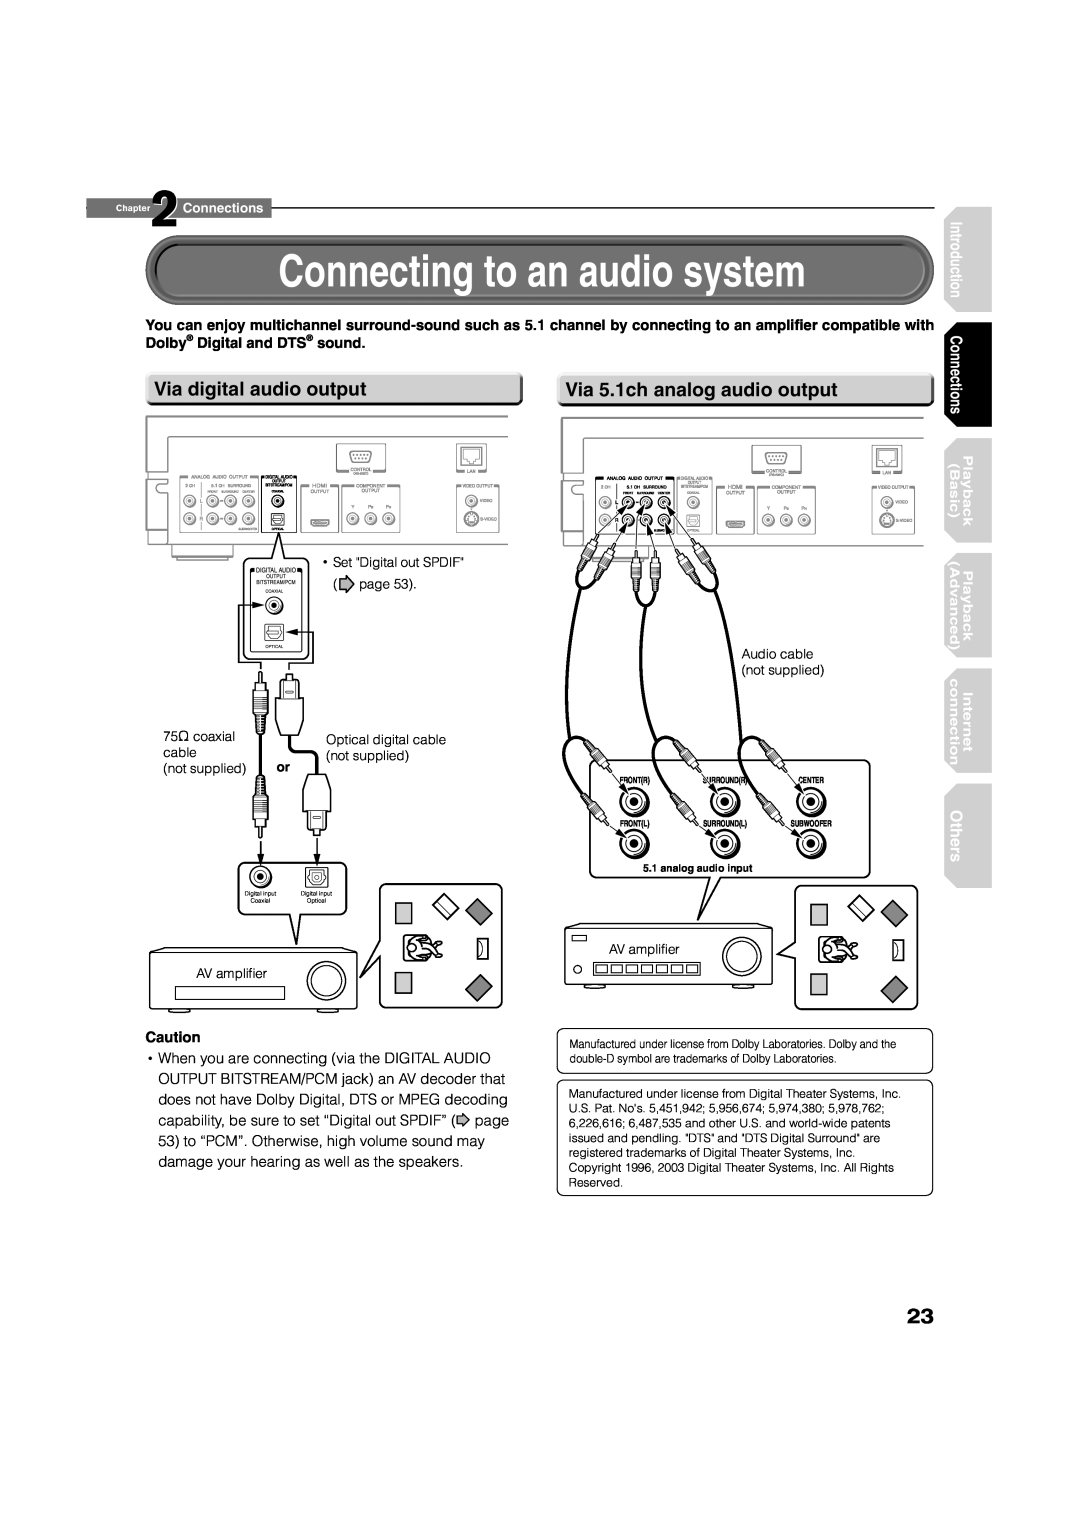 Toshiba hd-xa1kn Connecting to an audio system, Via digital audio output, Via 5.1ch analog audio output, Basic, Playback 